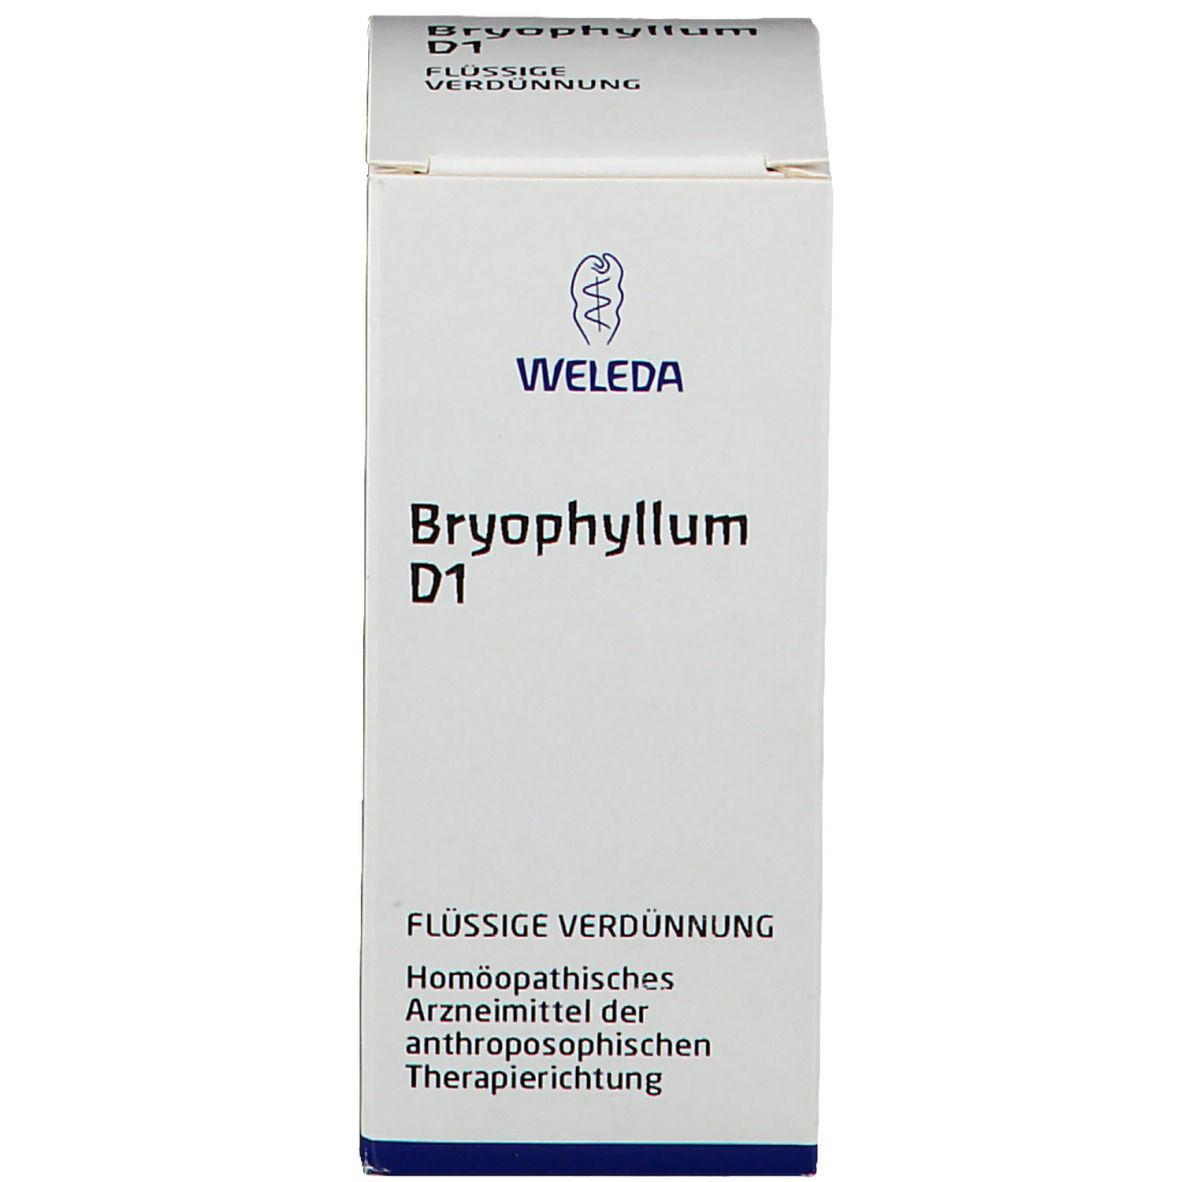 Weleda Bryophyllum D1 Dilution